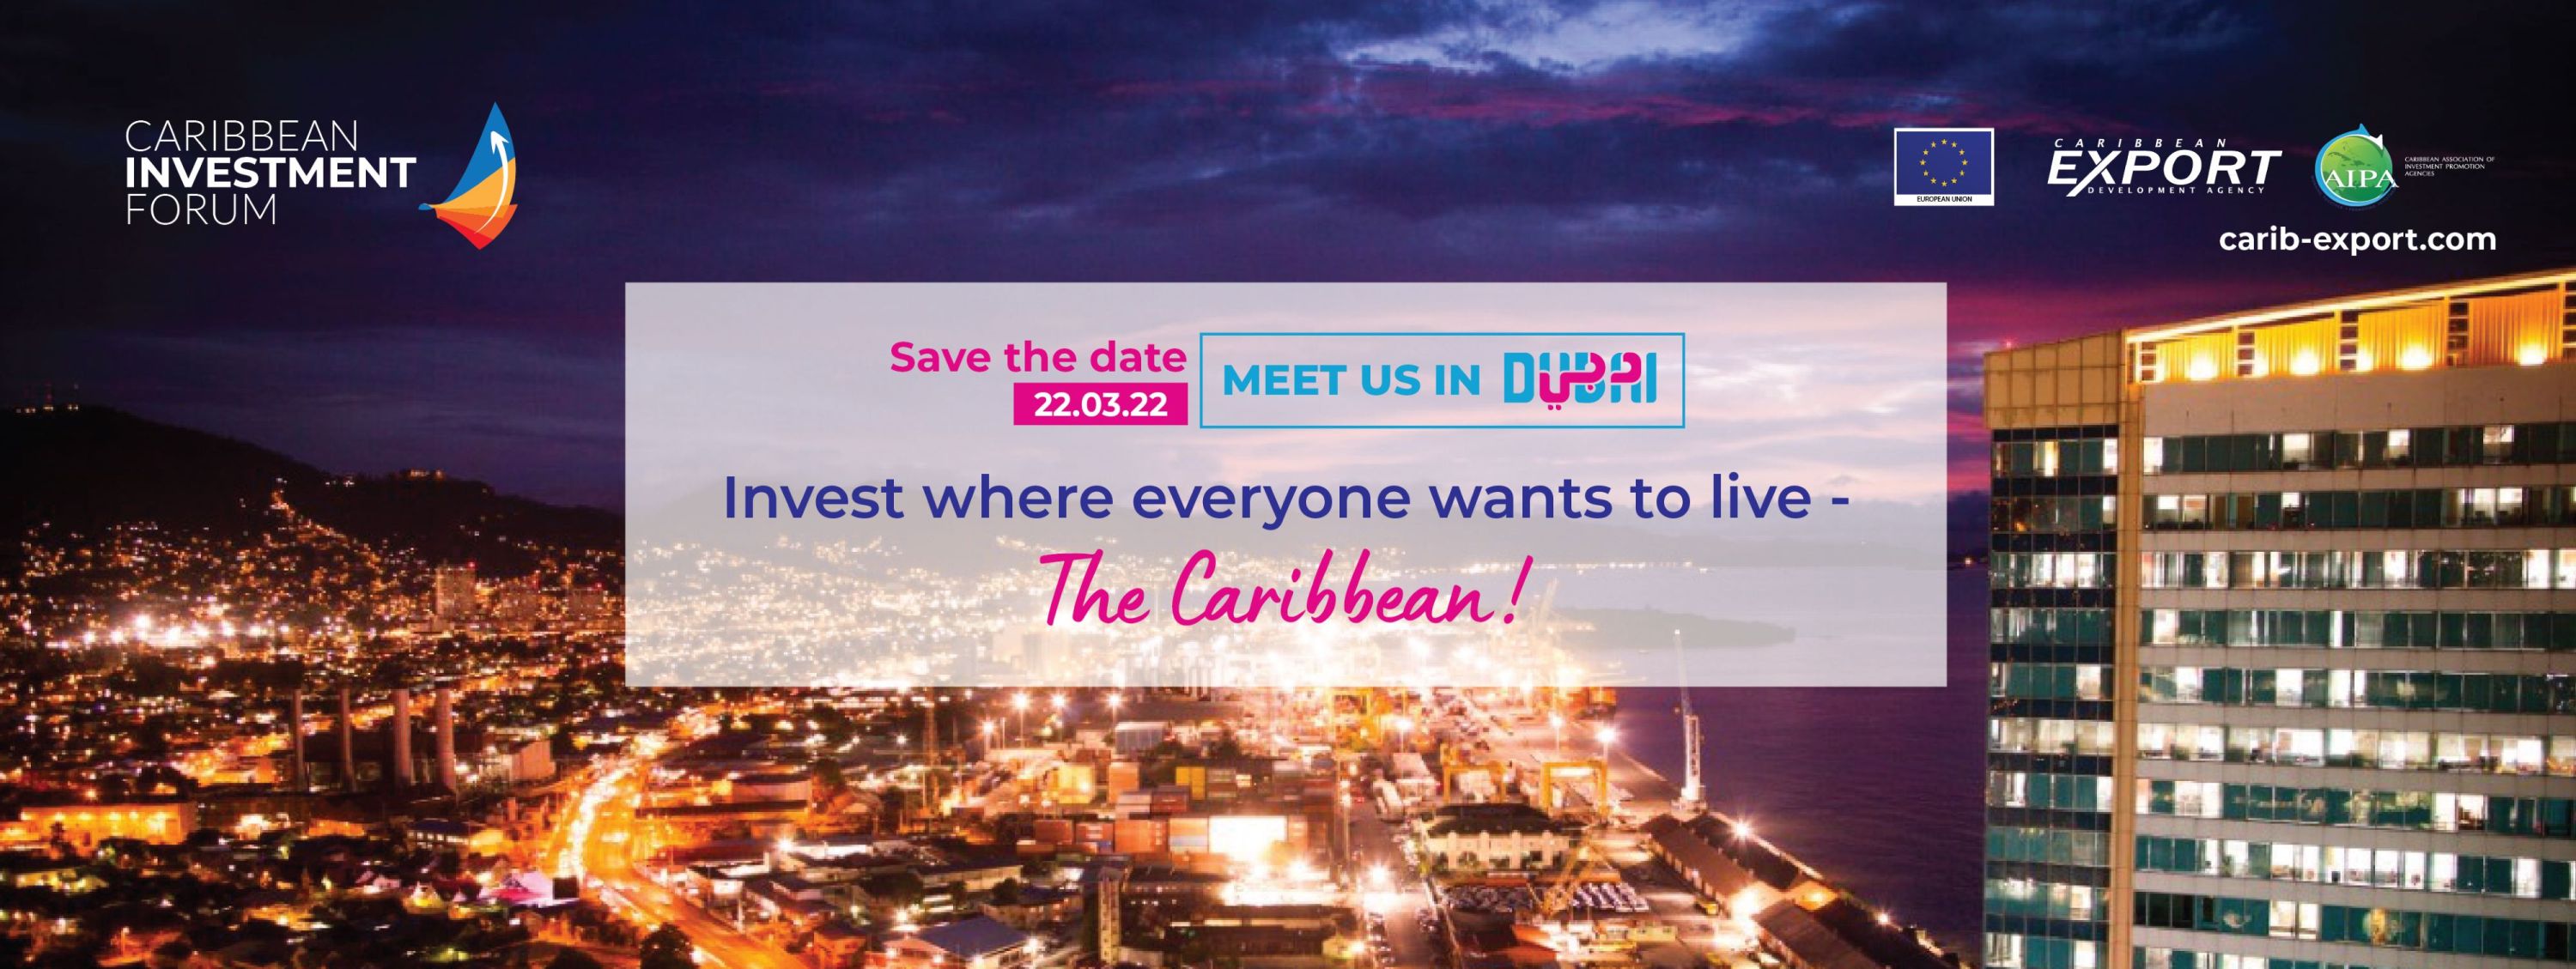 CAIPA To Host Caribbean Investment Forum in Dubai Main Photo